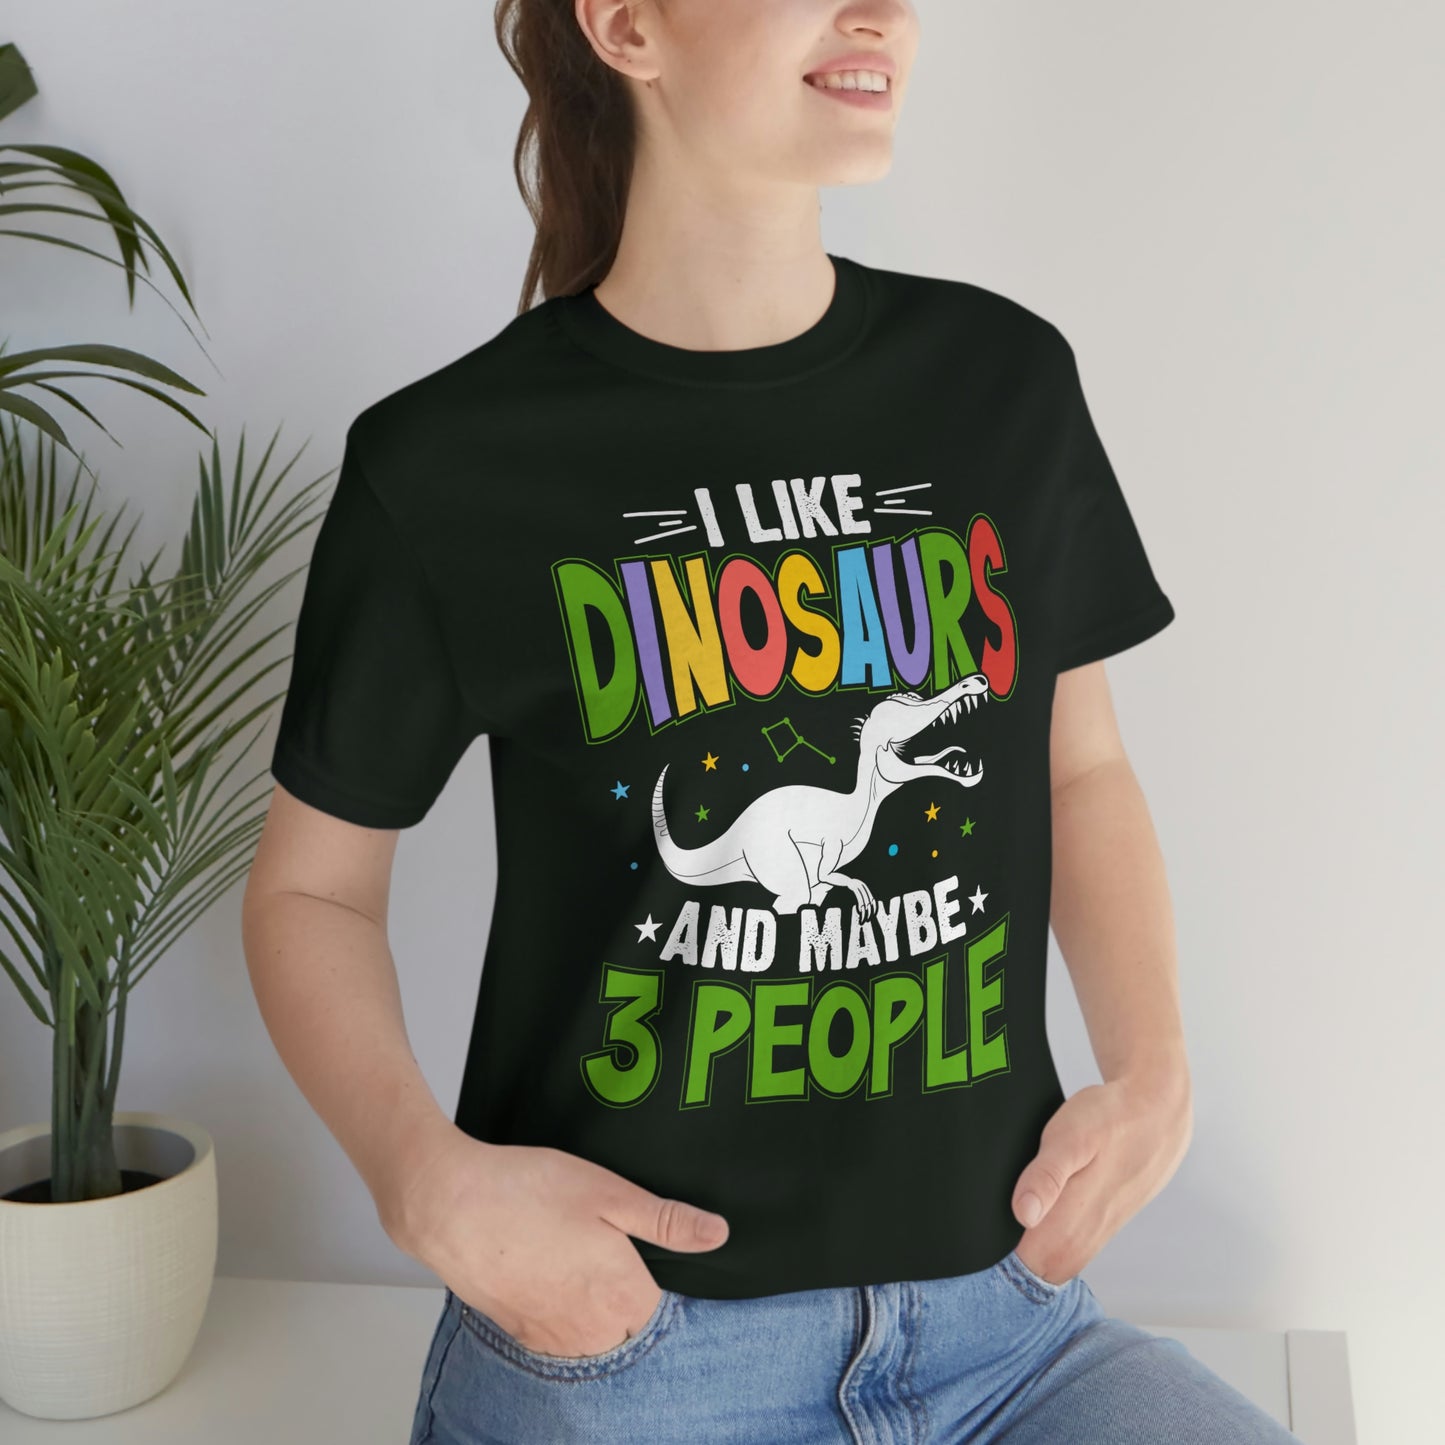 I Like Dinosaurs and Maybe 3 People Unisex Jersey Short Sleeve Tee